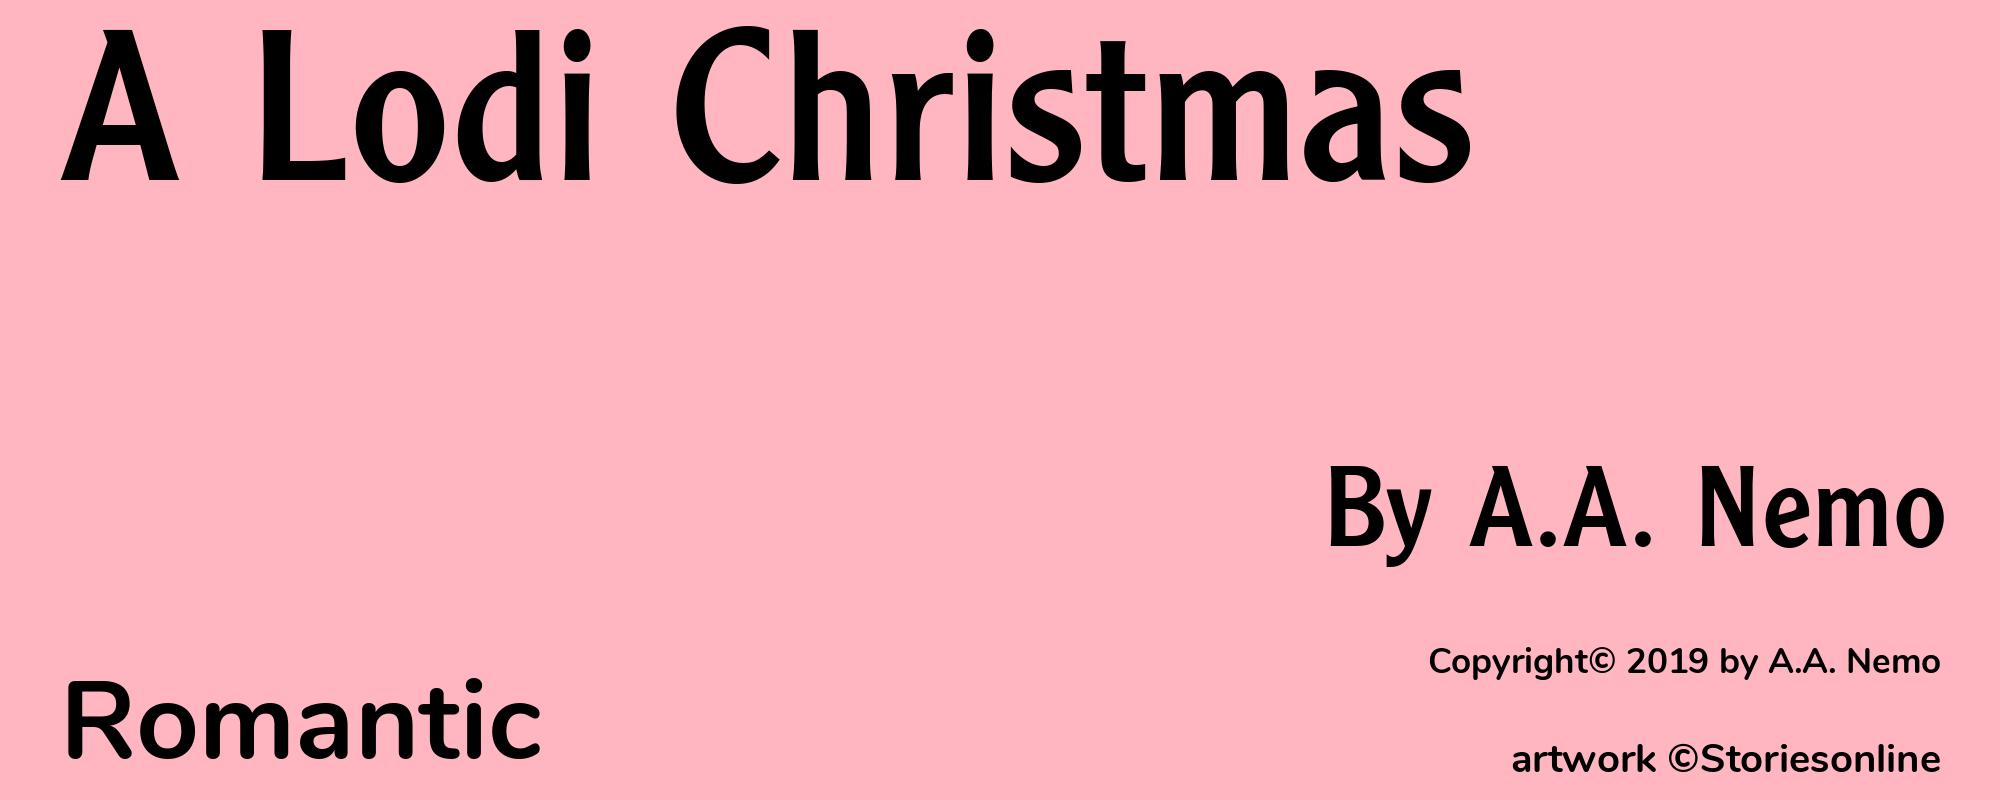 A Lodi Christmas - Cover